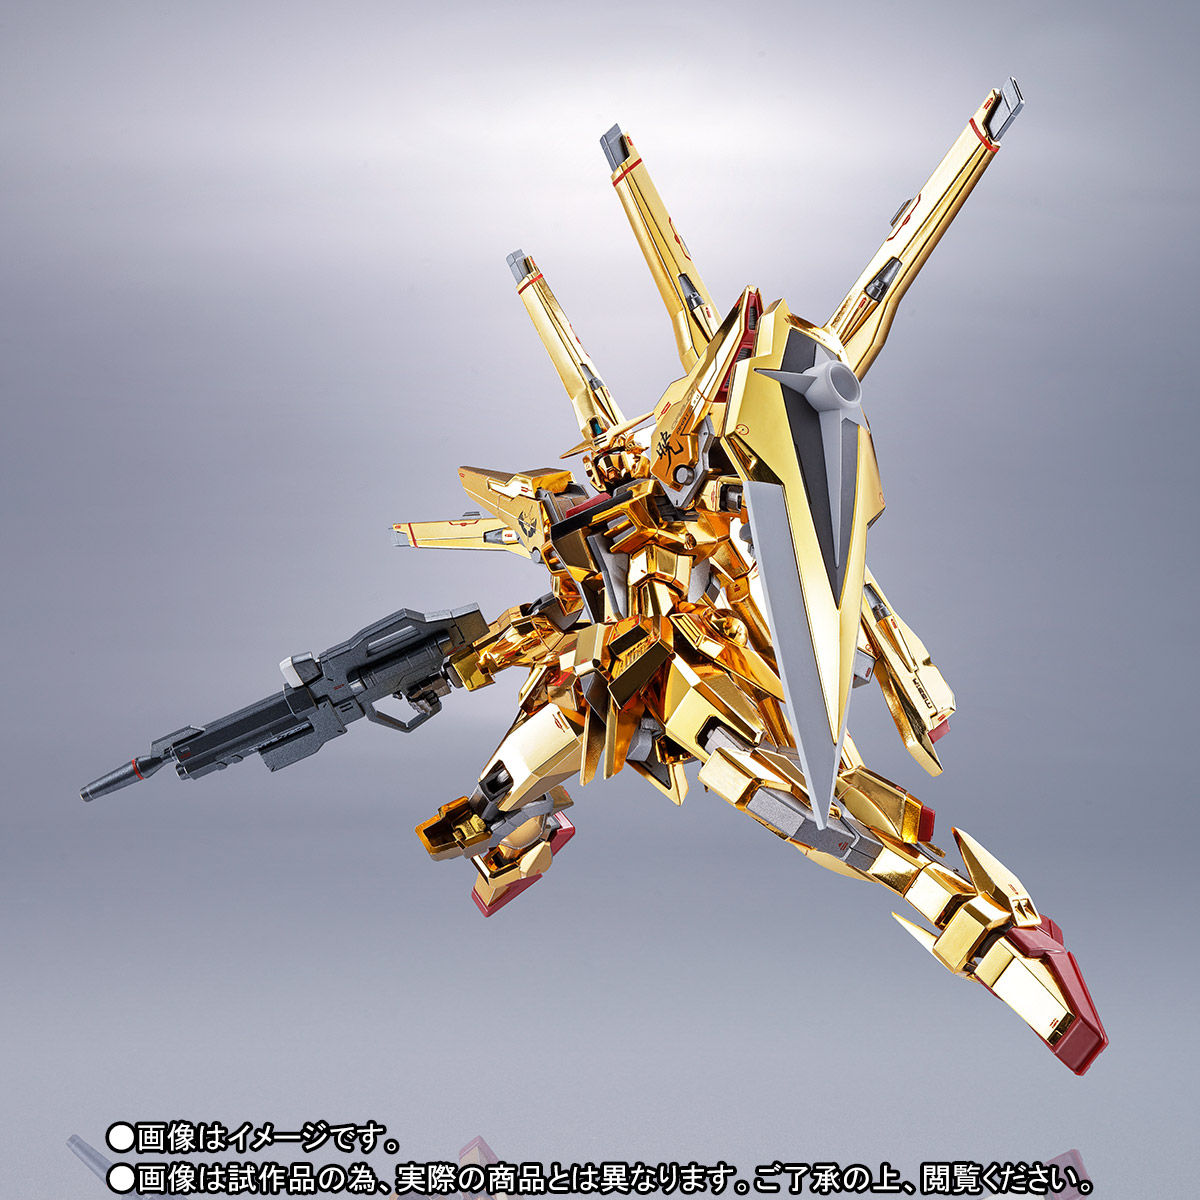 Metal Robot Spirits(Side MS) ORB-01 Akatsuki Gundam(Shiranui Unit)